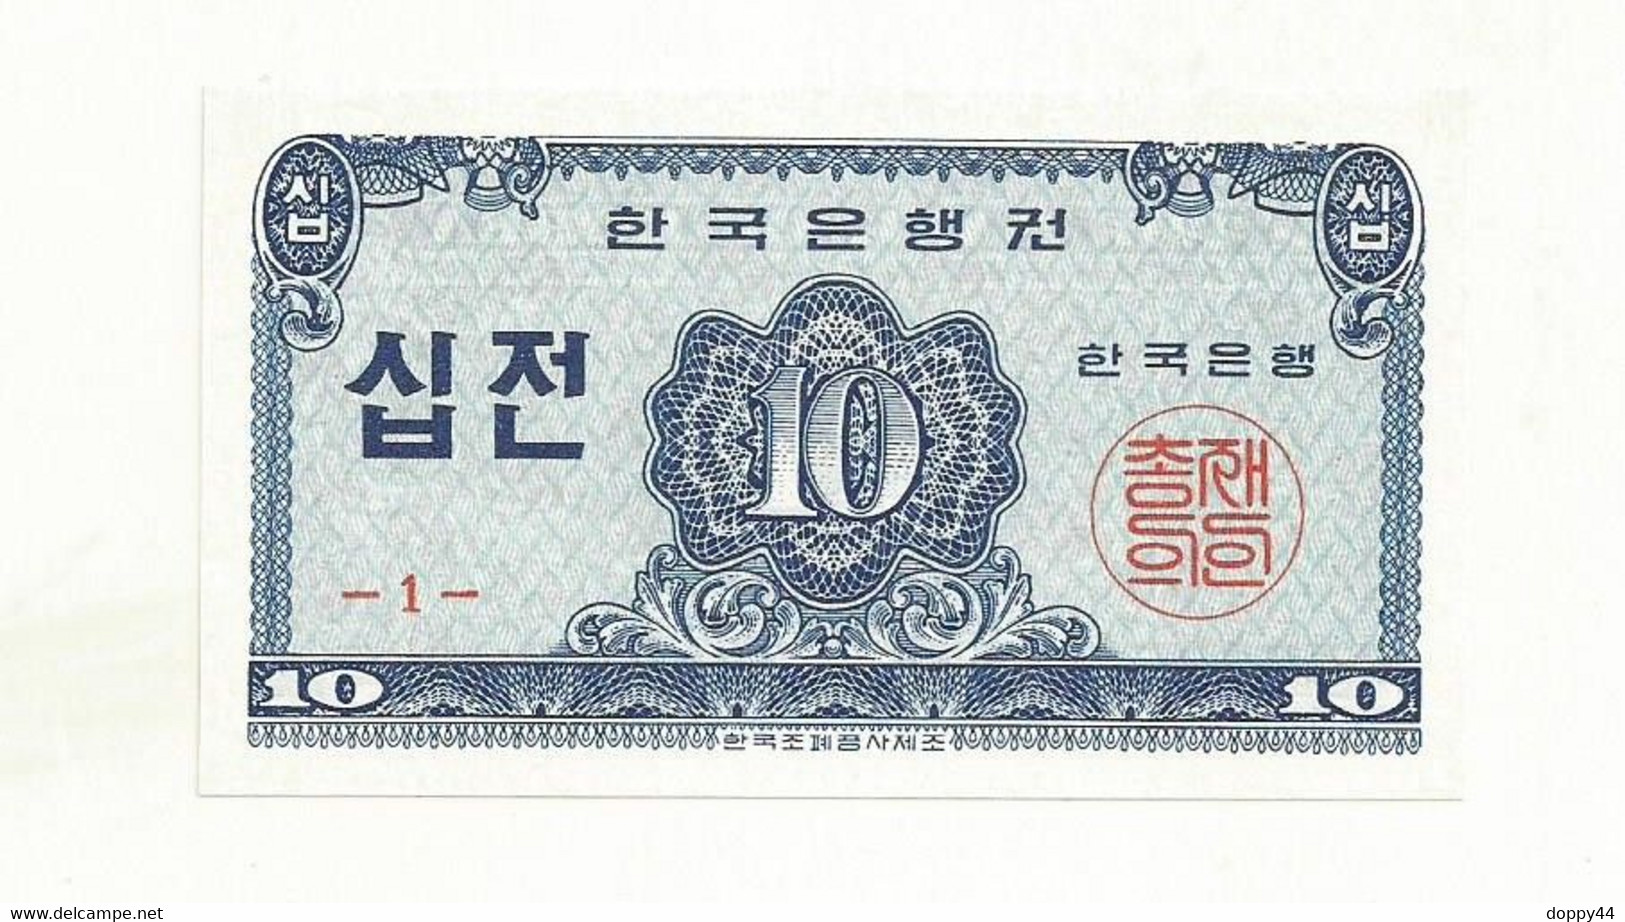 BILLET NEUF COREE EMIS EN 1962 10 JEON. - Corea Del Sur